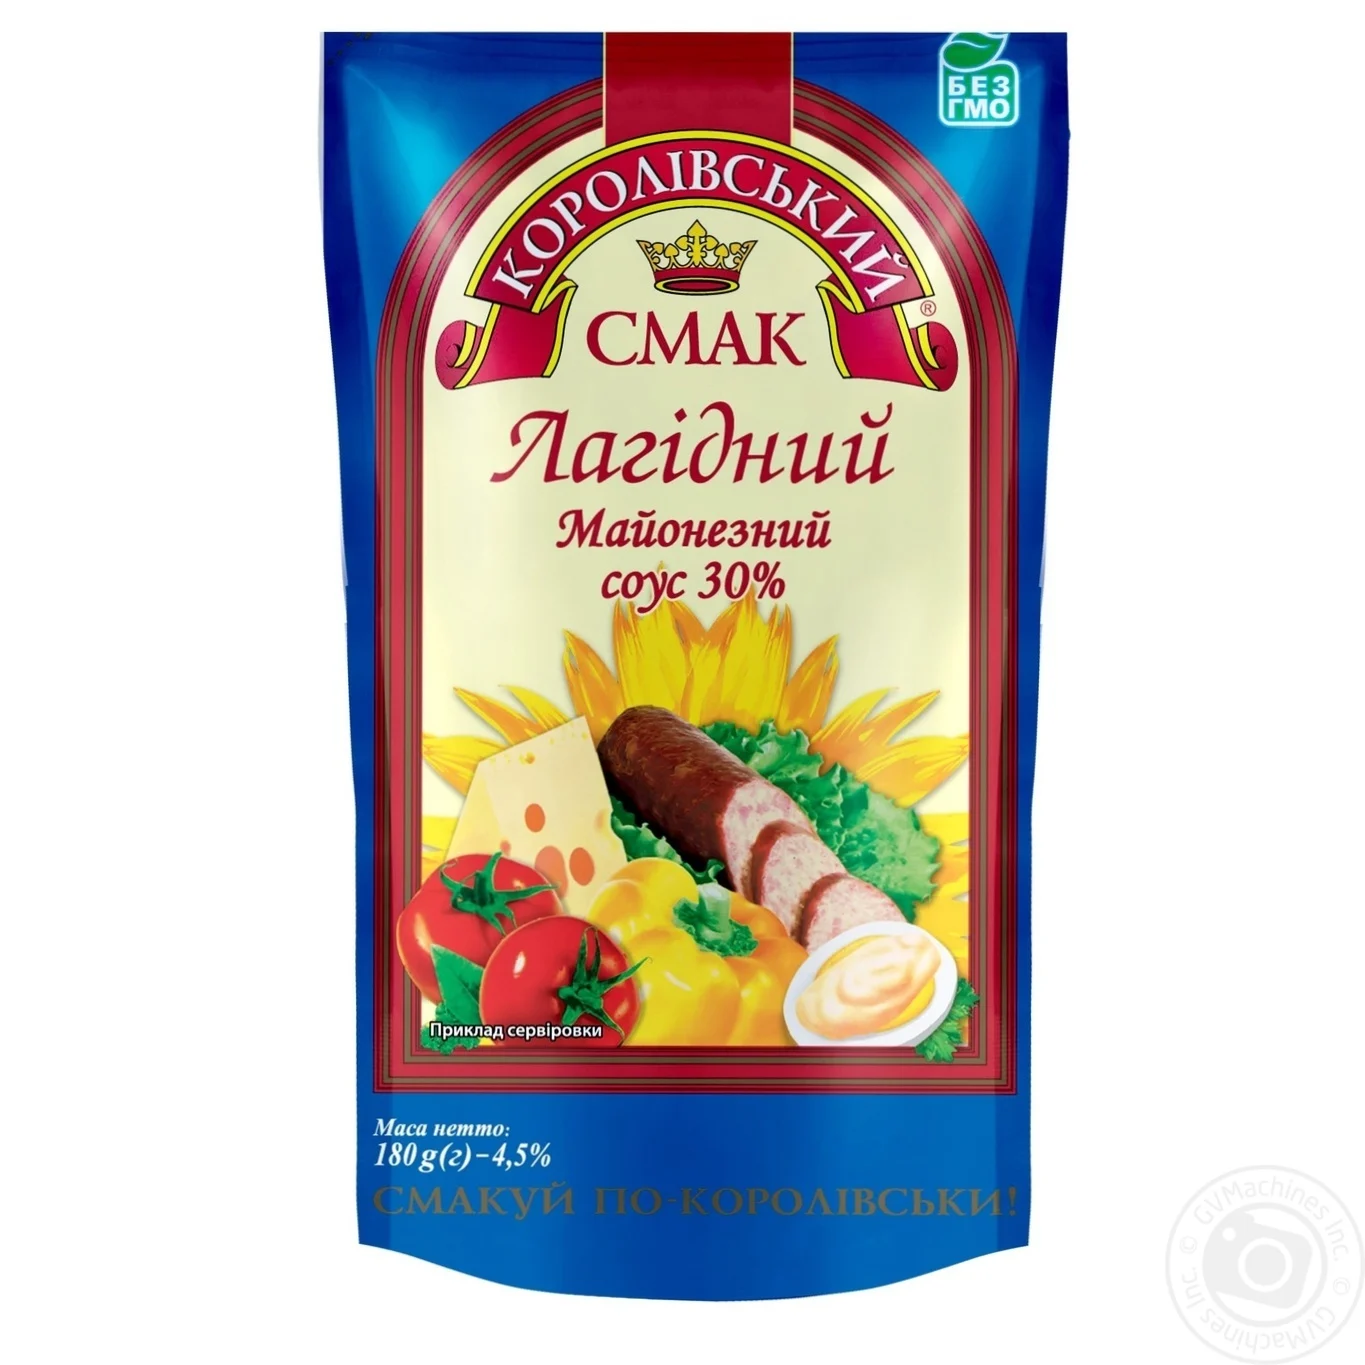 Korolivsky Smak mayonnaise sauce Mild 30% 160g